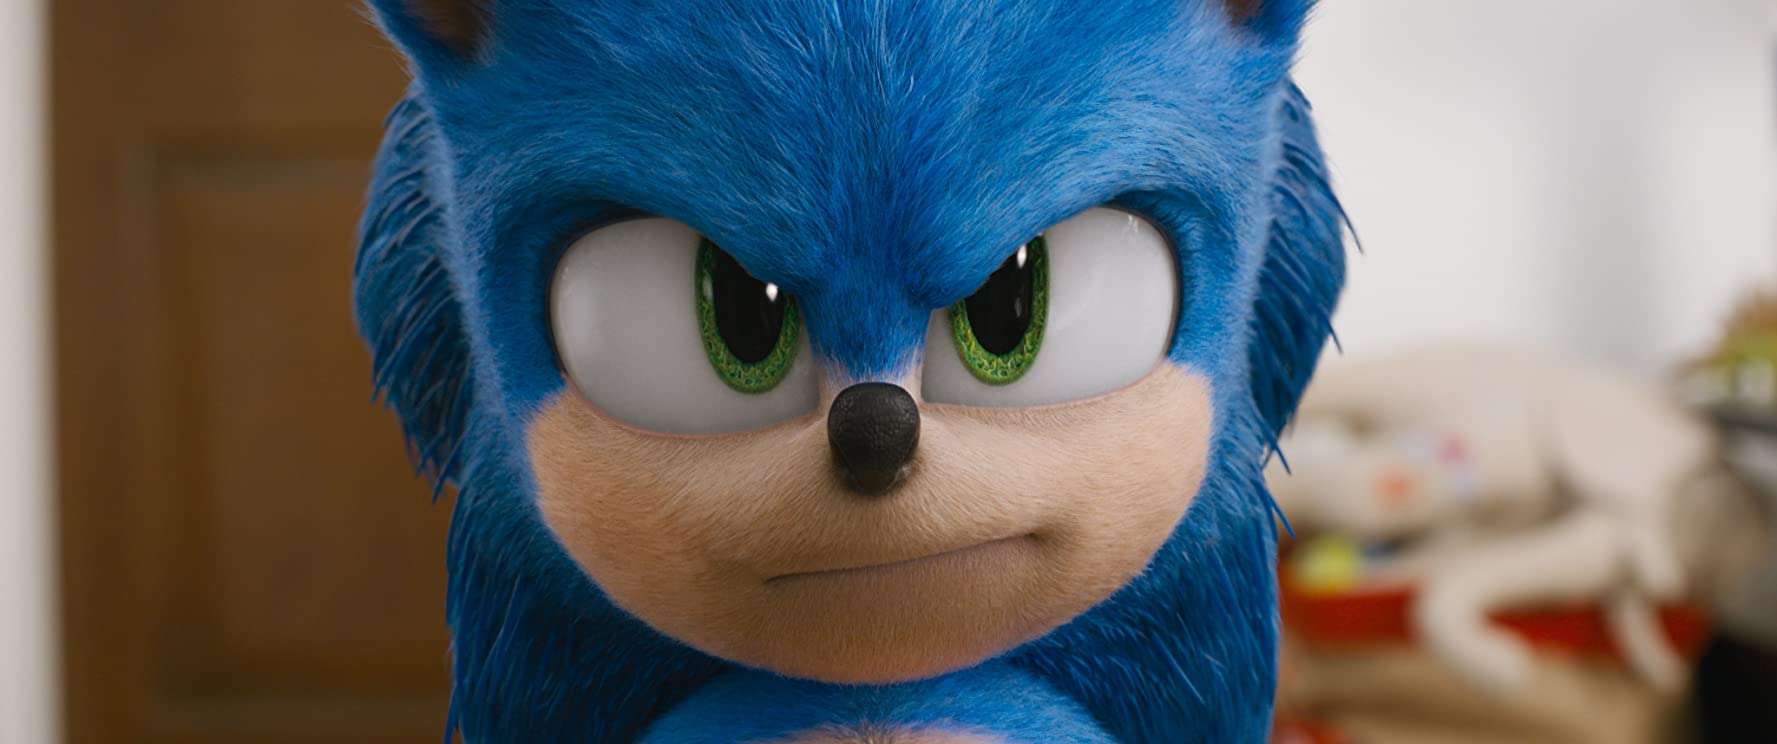 Sonic-The-Hedgehog-2020